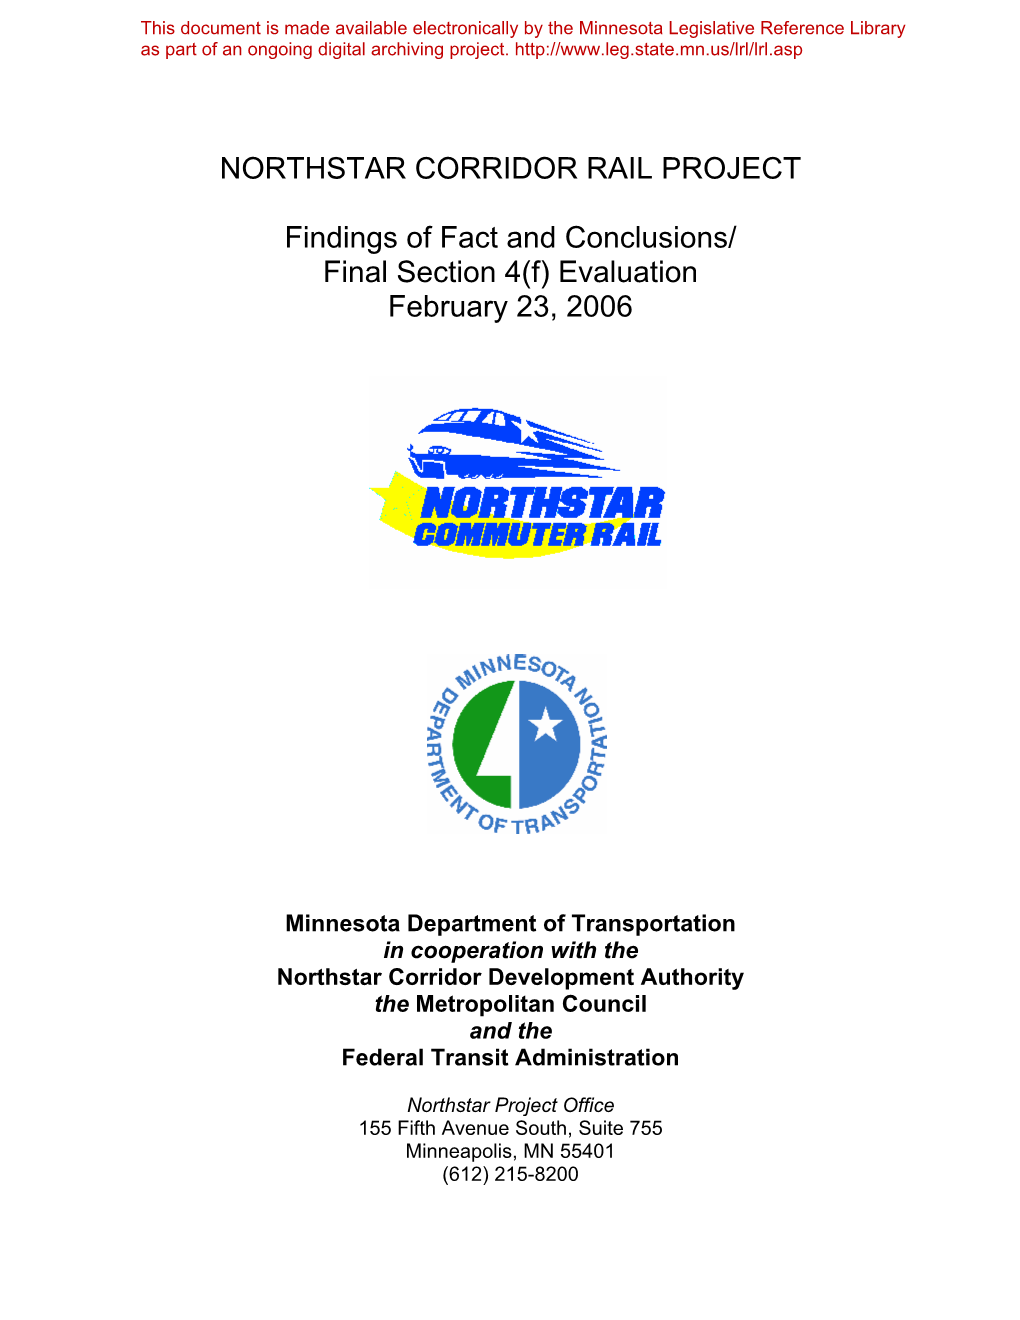 Northstar Corridor Rail Project